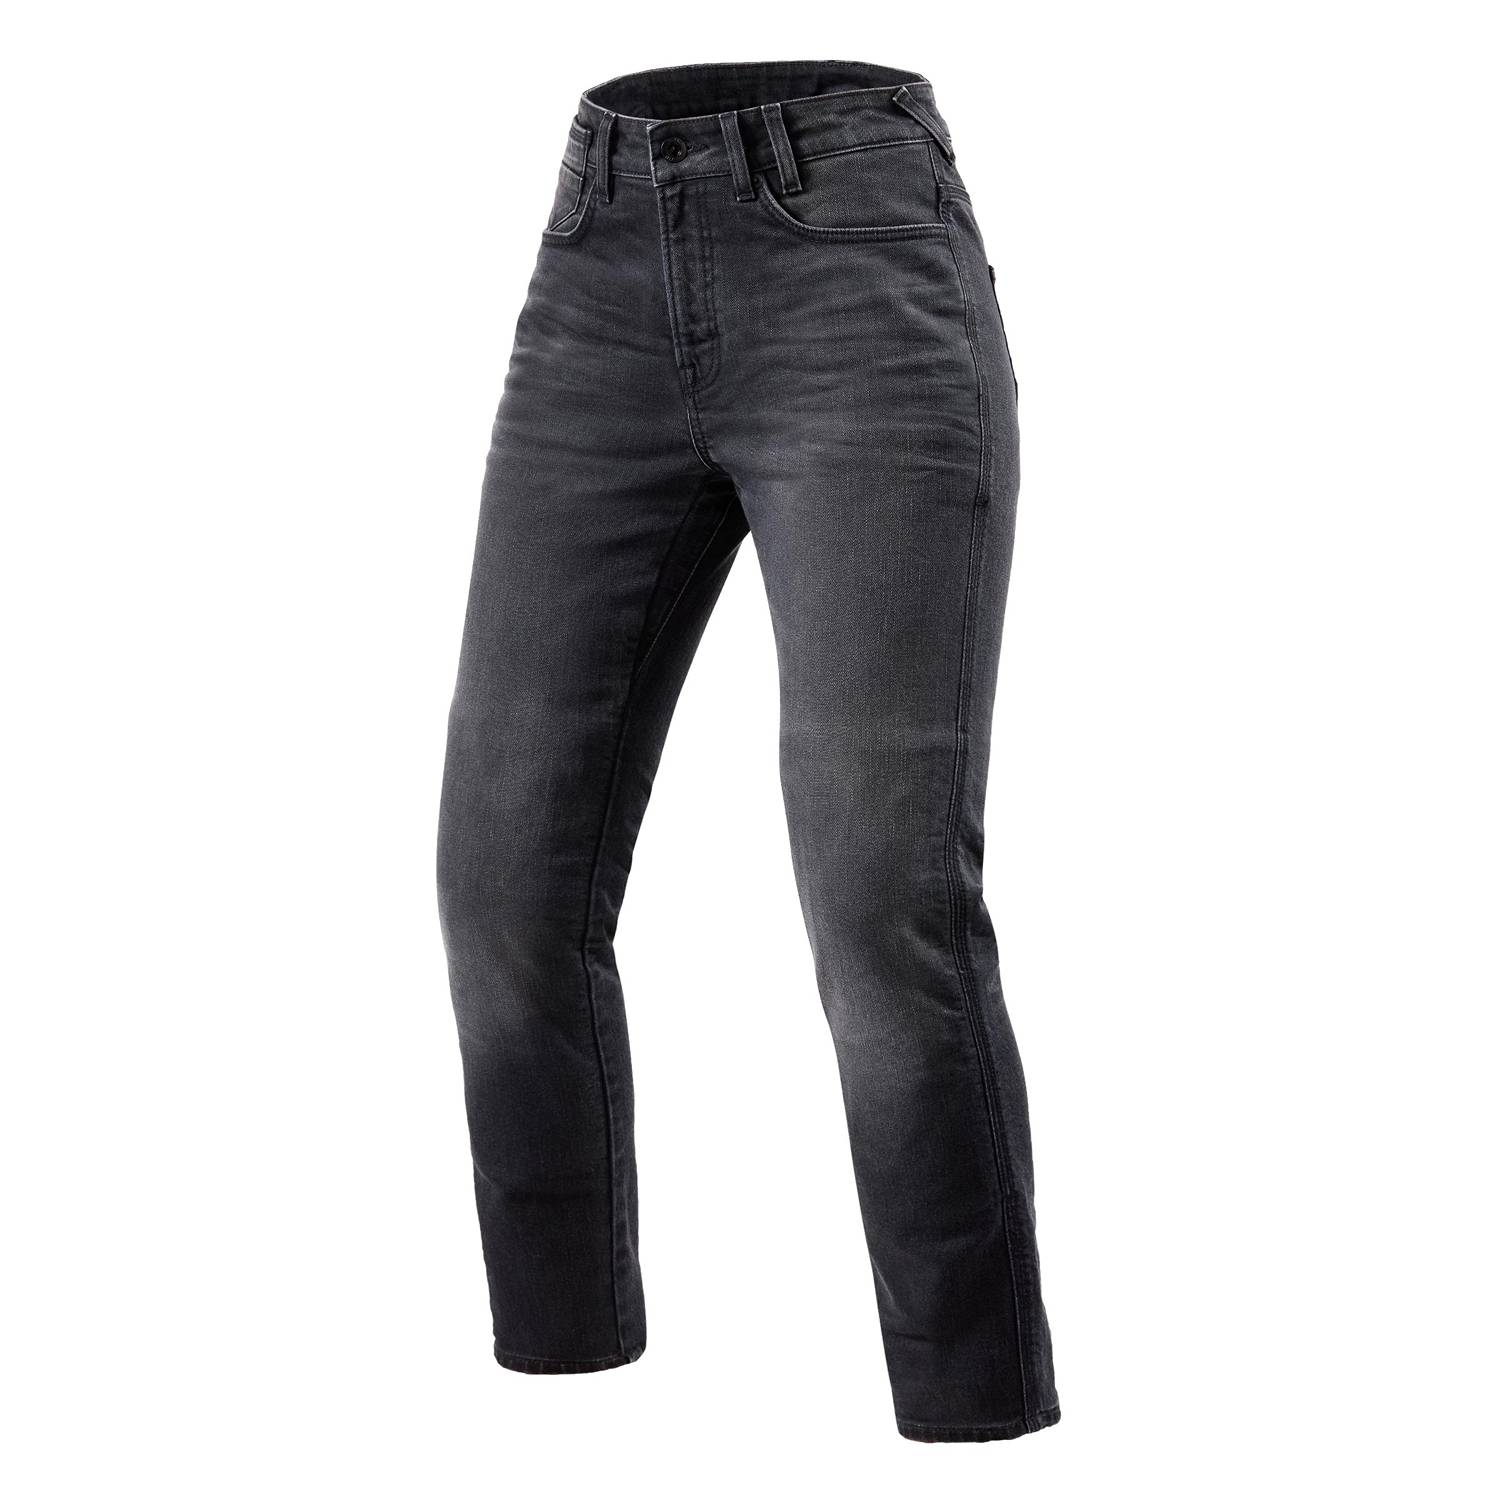 Image of REV'IT! Jeans Victoria 2 Ladies SF Mid Grey Used Motorcycle Jeans Size L32/W31 EN